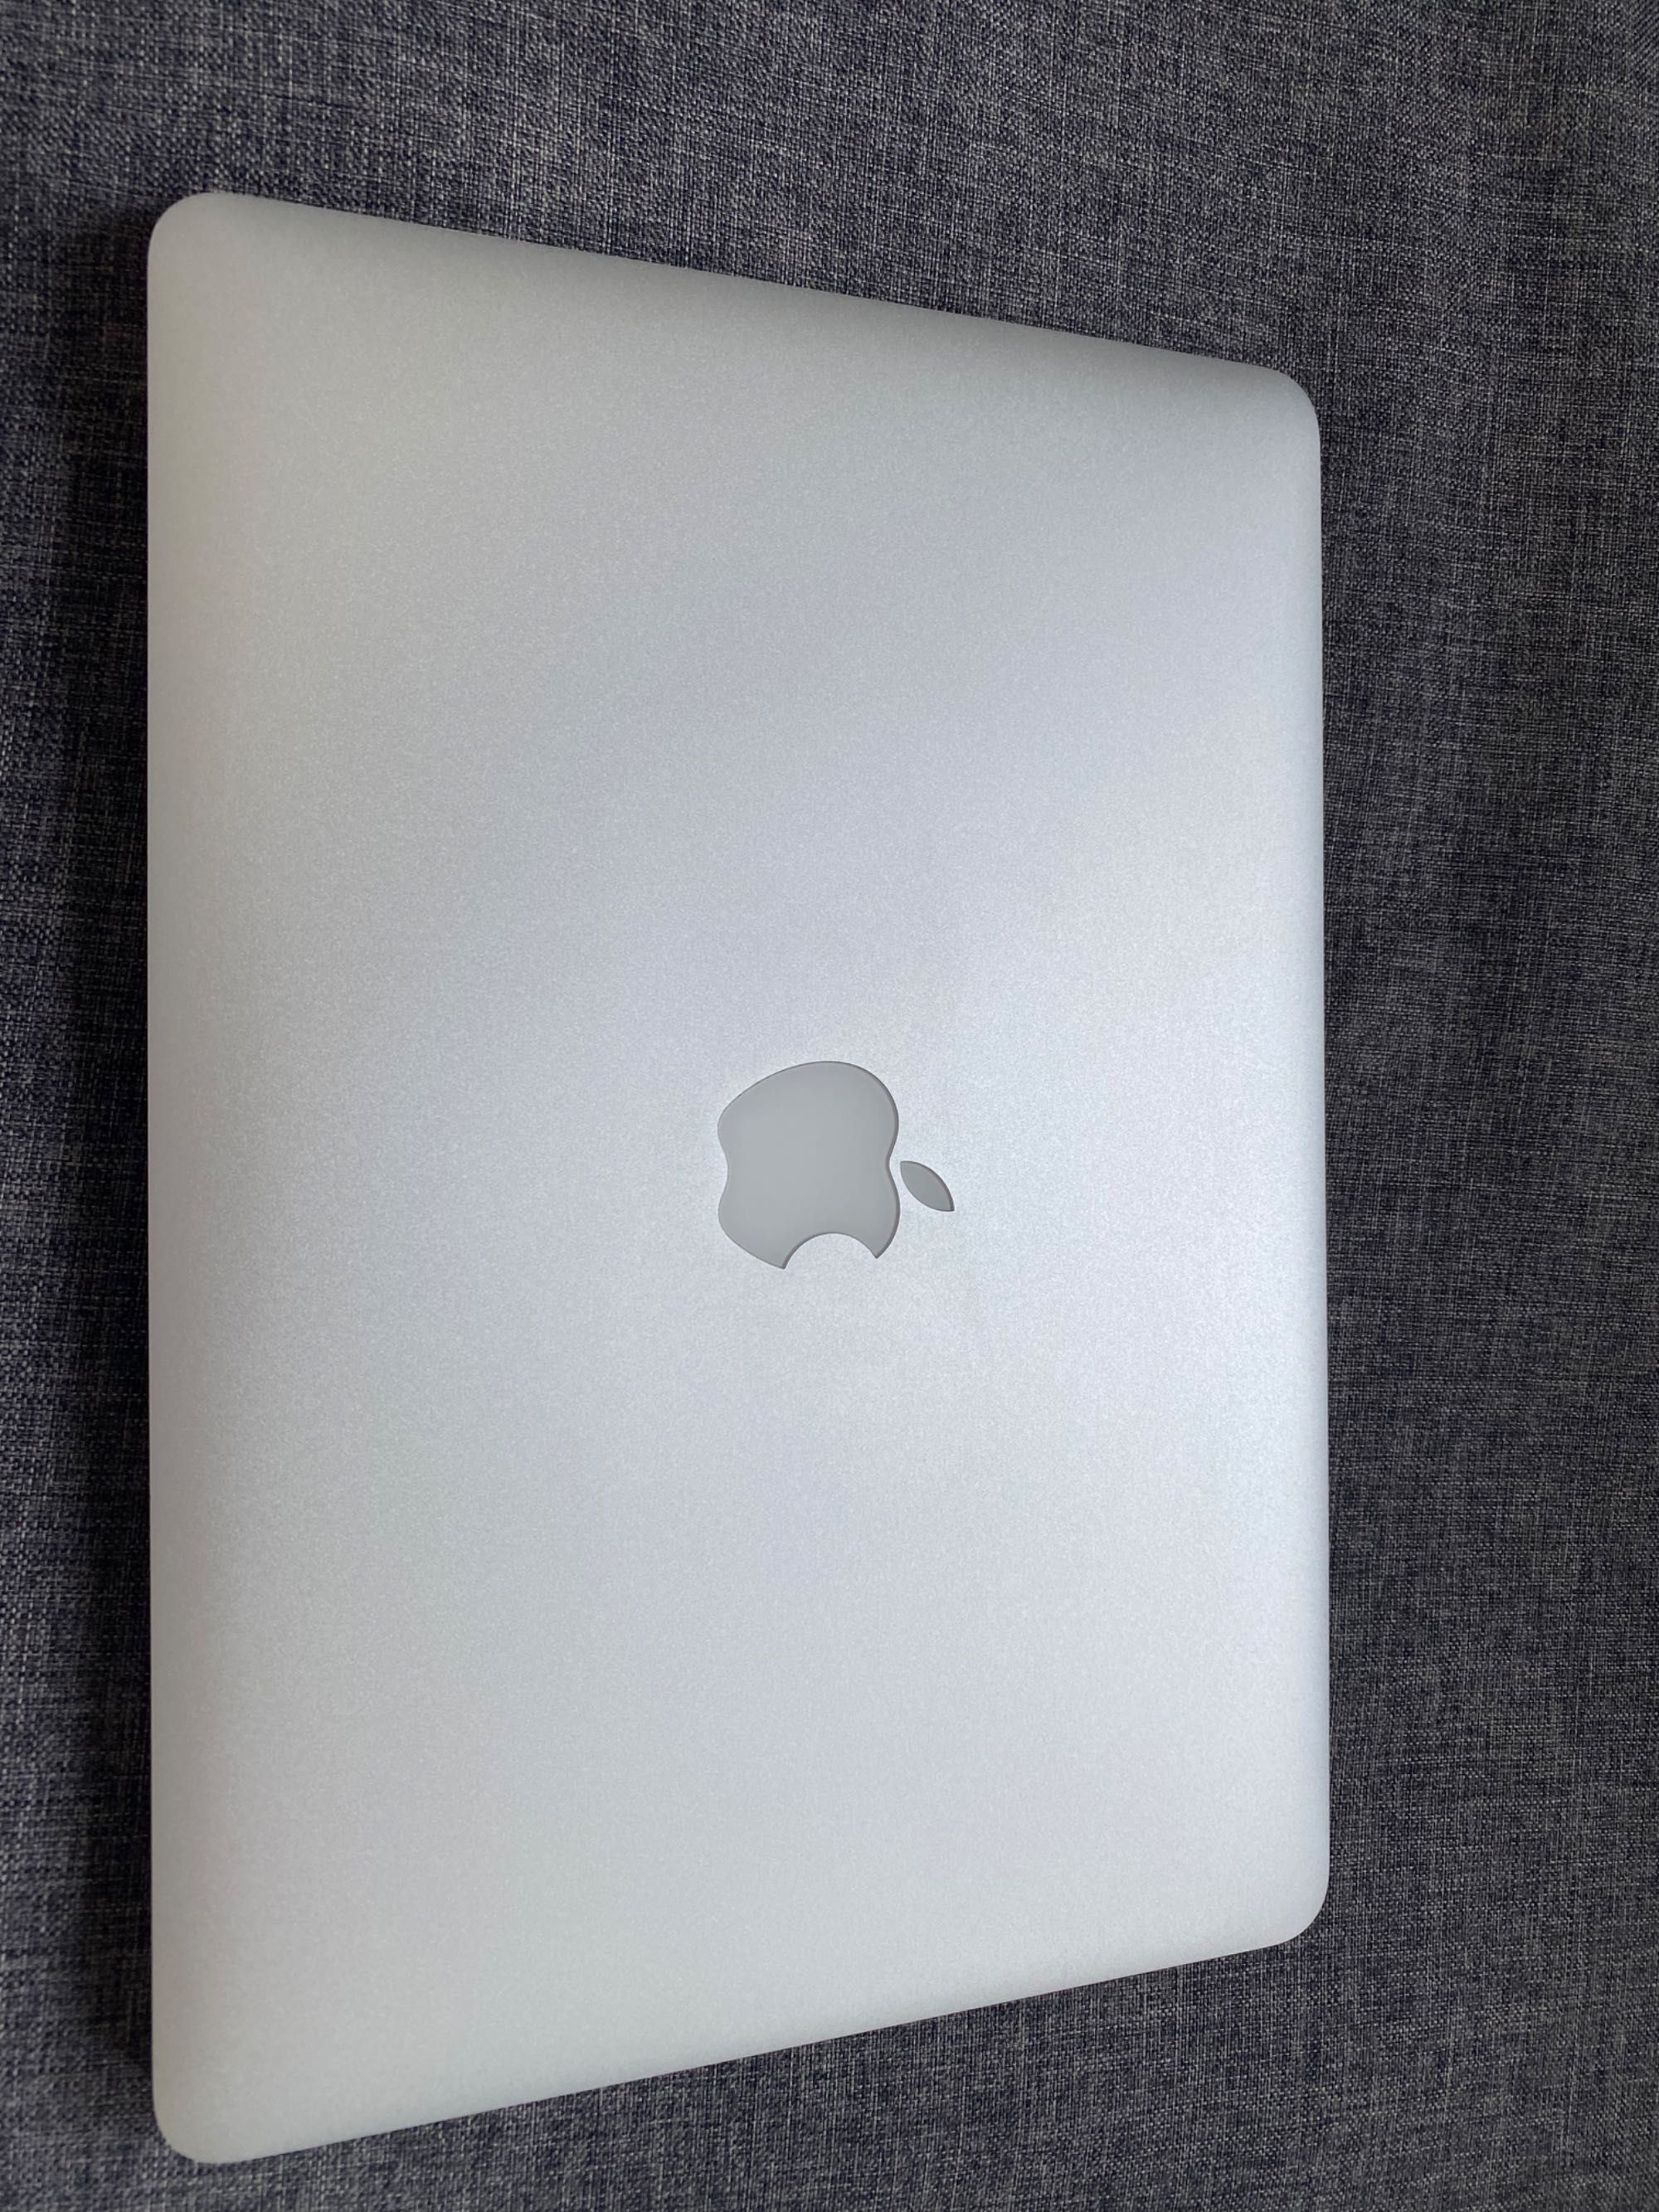 MacBook Air 13, używany